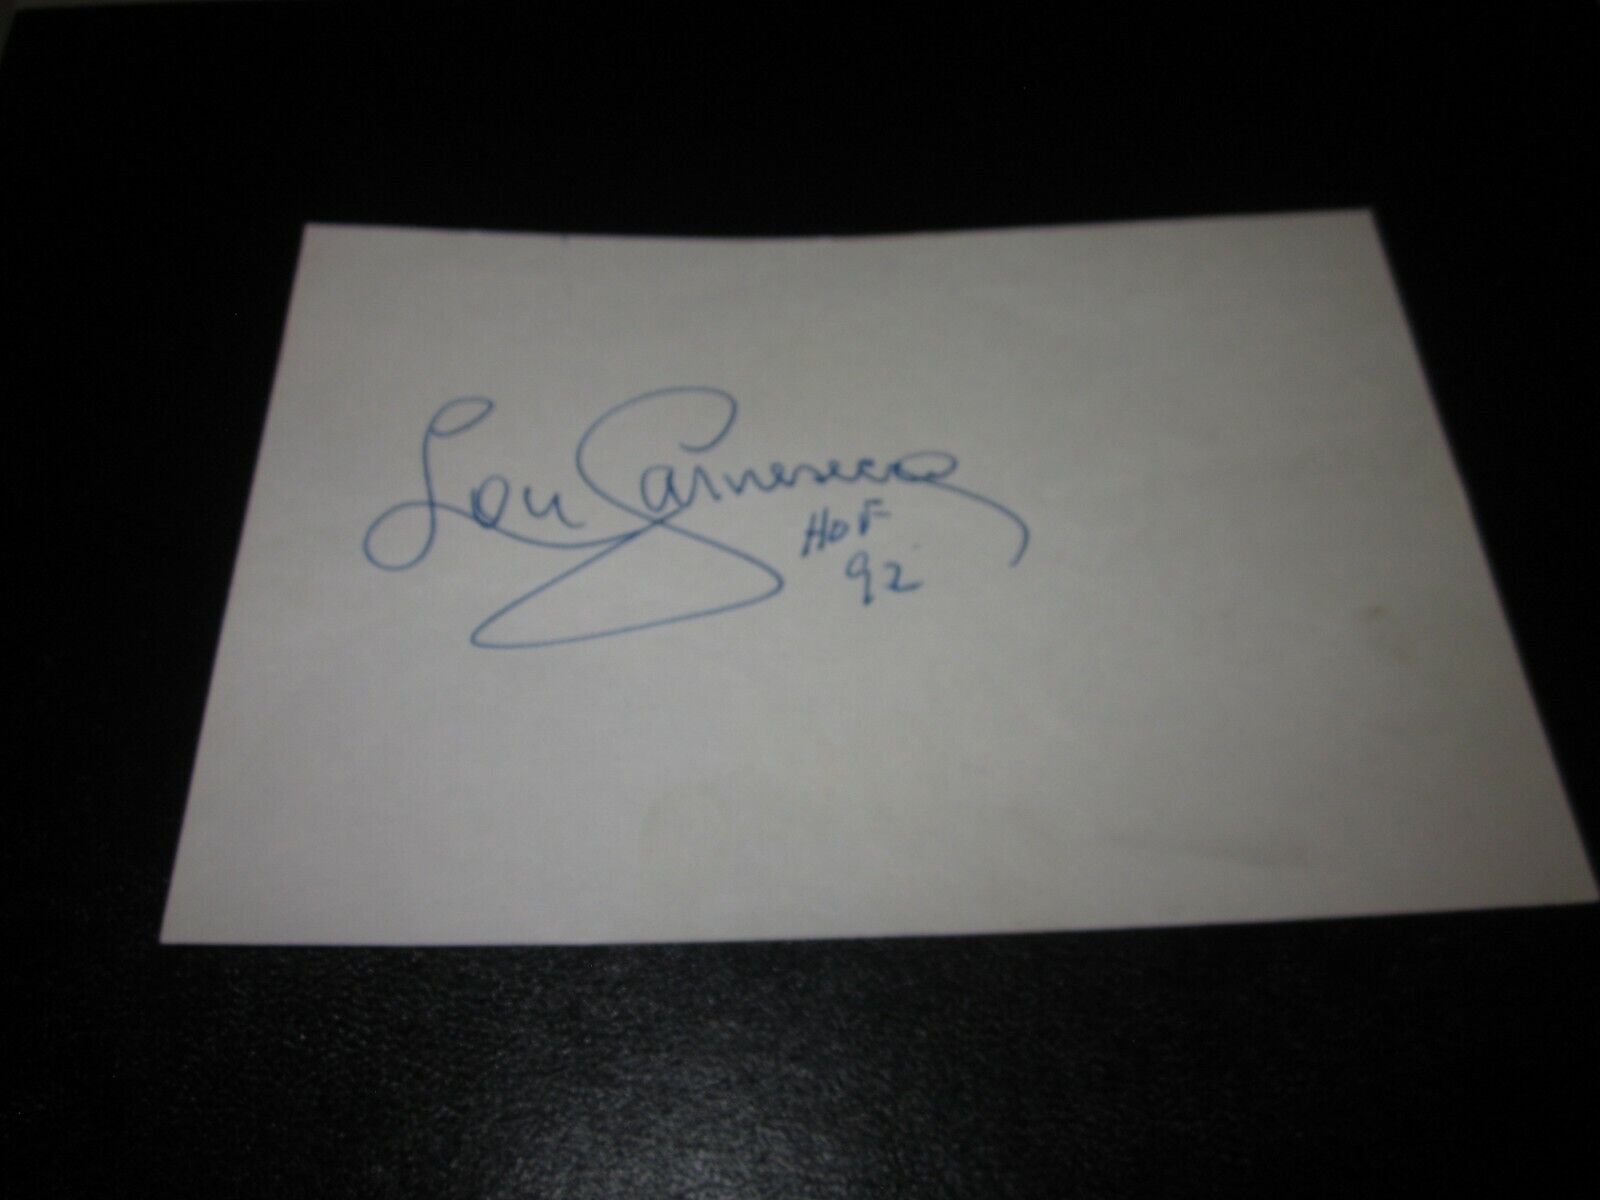 Lou Carnesecca Signed Autographed 4x6 Index Card Hof 92 Inscription